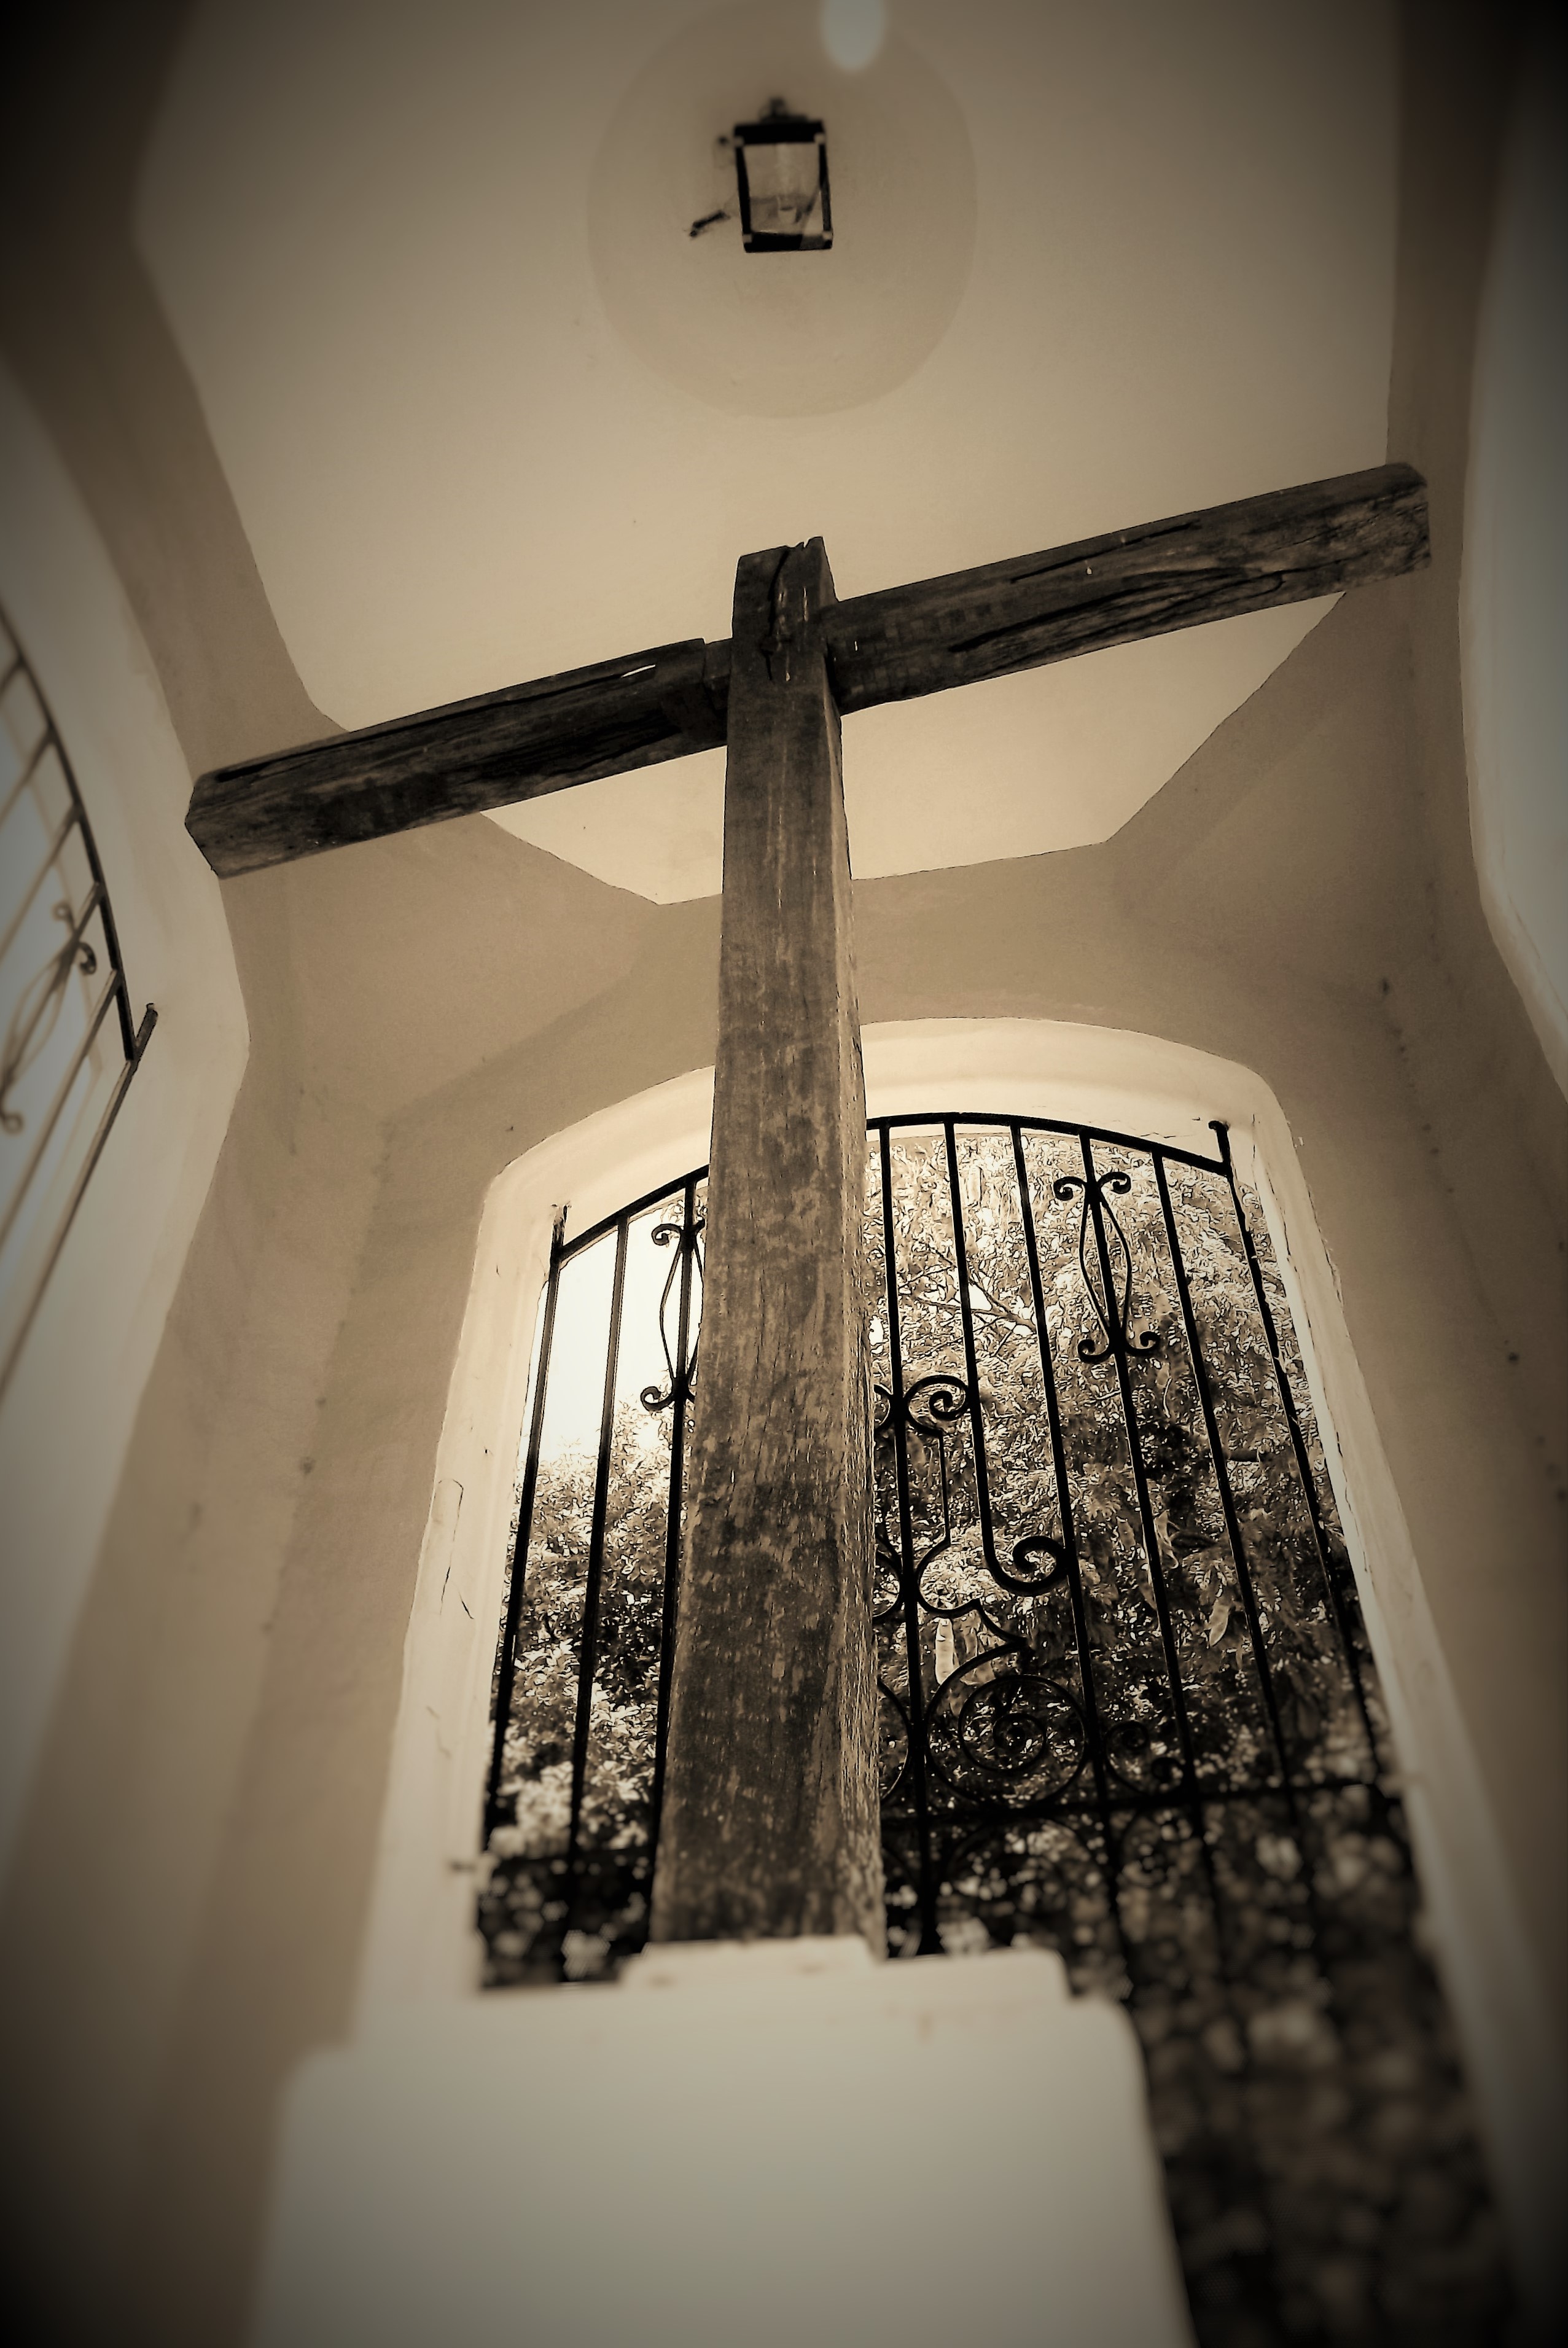 Cruz de San Clemente - Cross of San Clemente